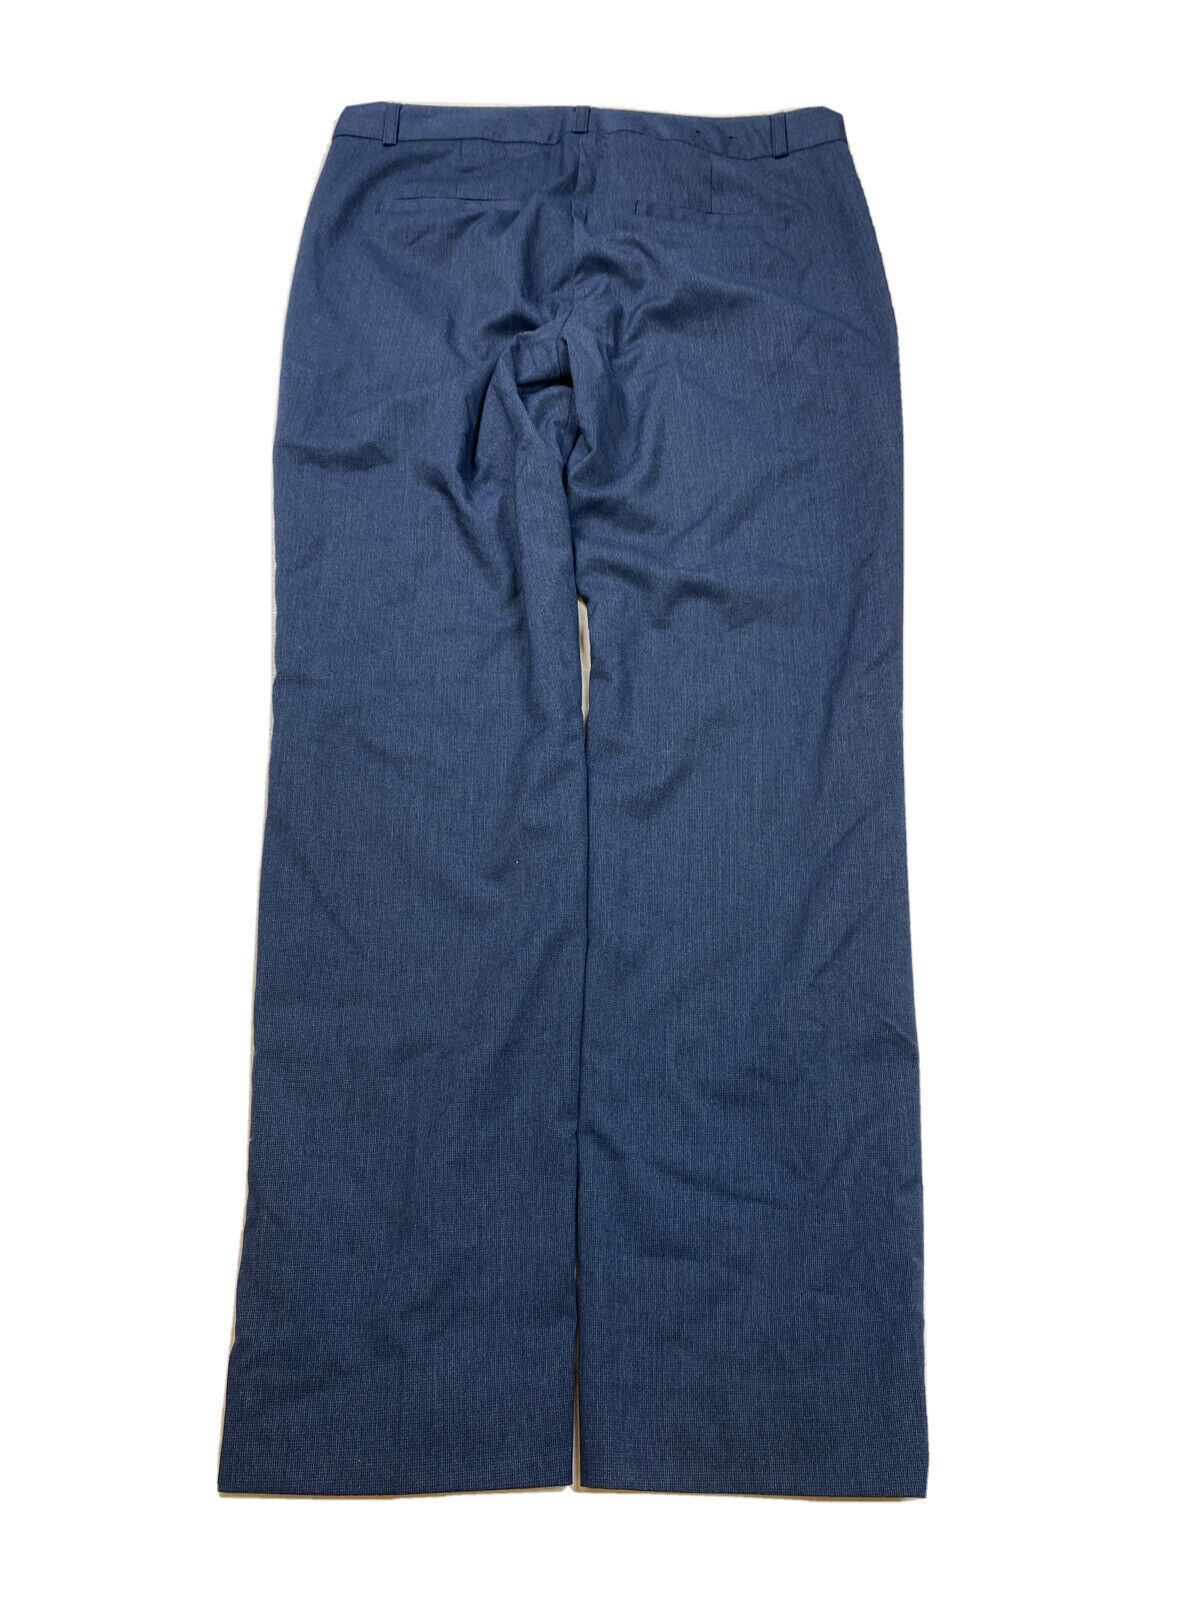 Banana Republic Women's Dark Blue Slim Leg Dress Pants - 6